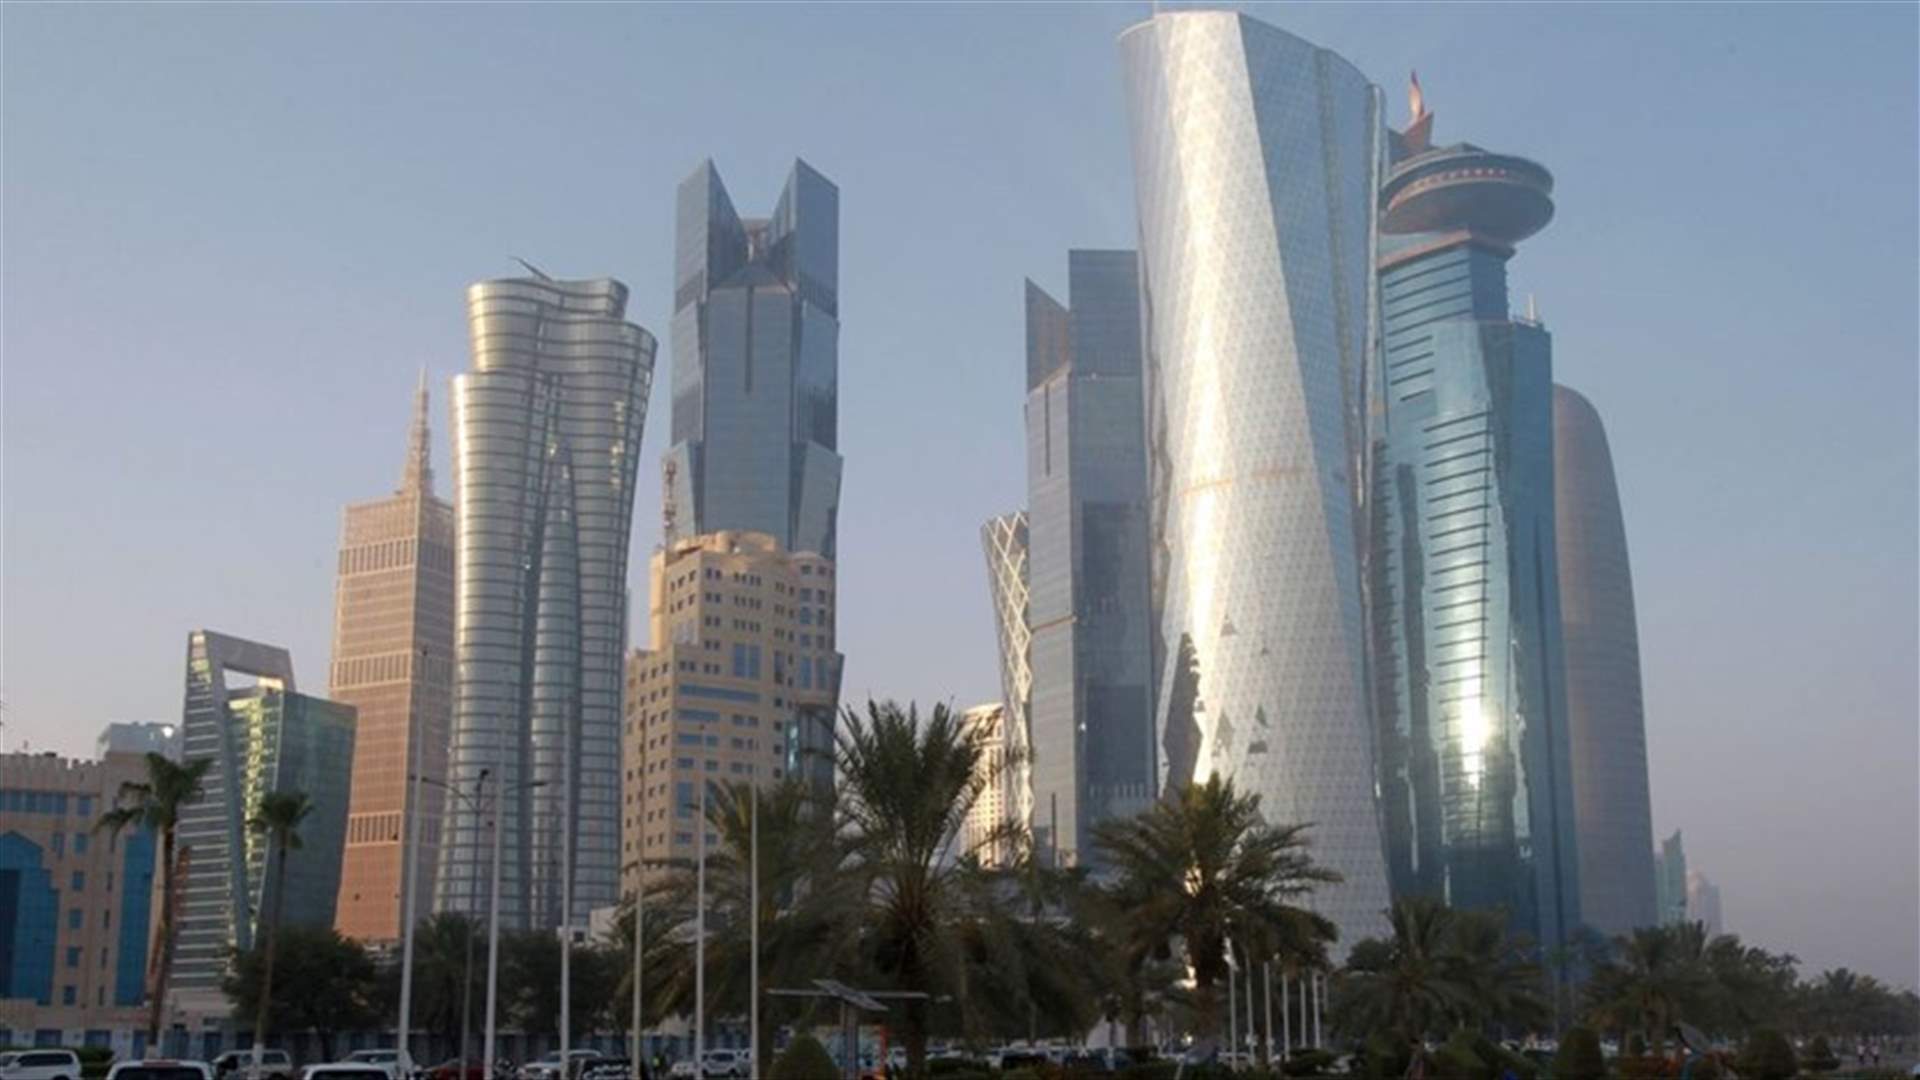 Saudi Arabia defies US pressure to end Qatar row after Khashoggi killing